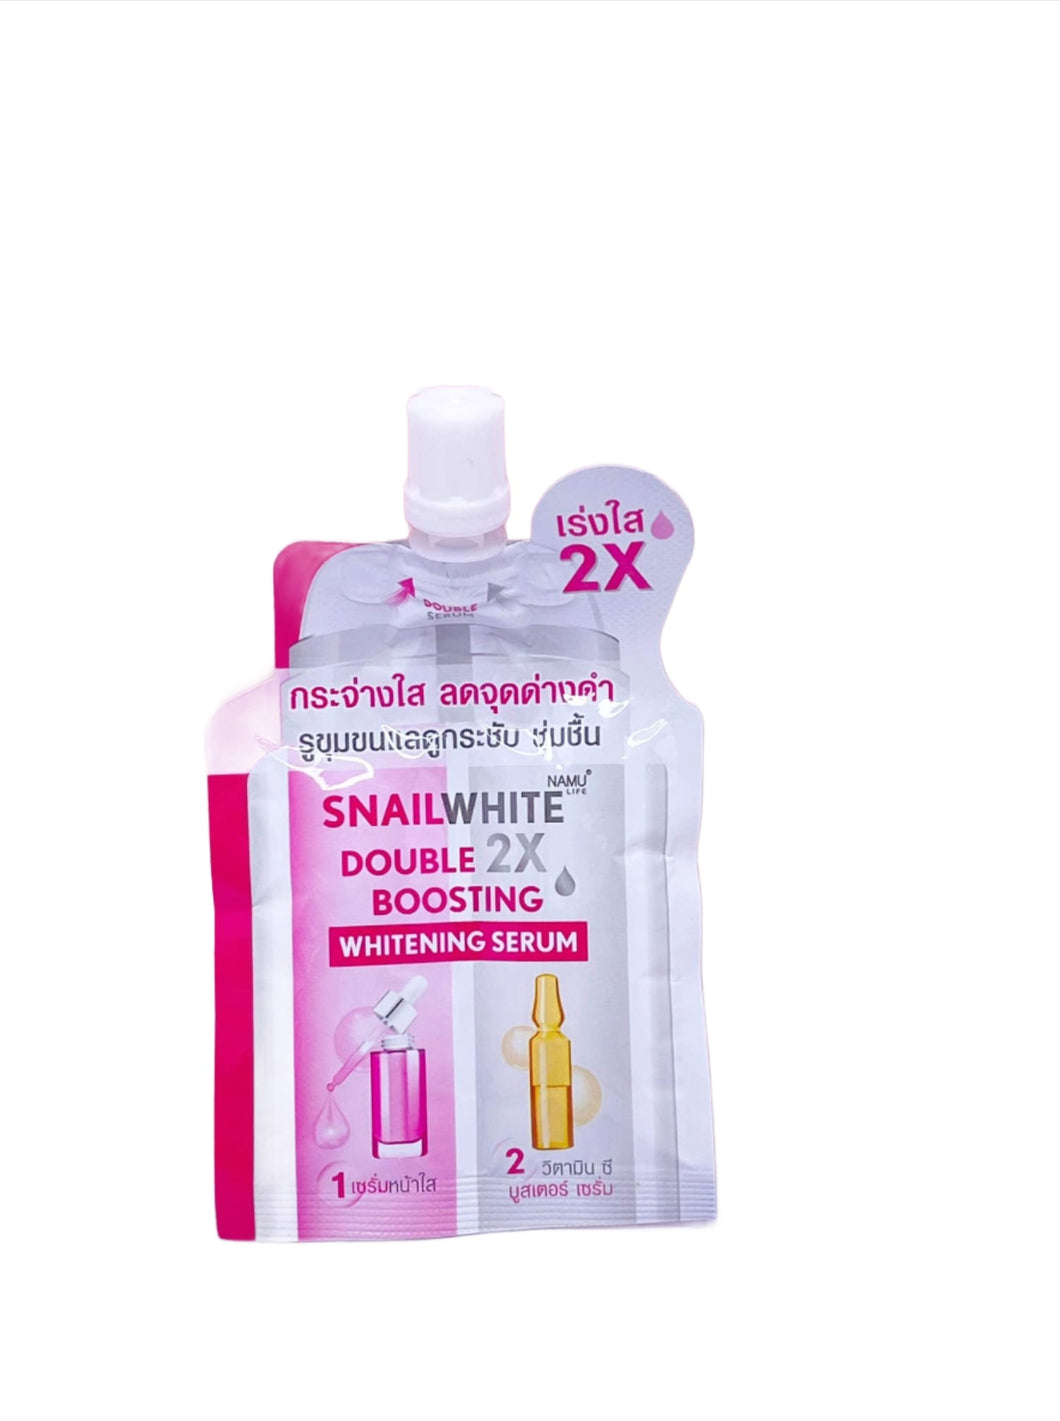 Snail White Double 2x Boosting Whitening Serum (Sachet) Authentic Thailand